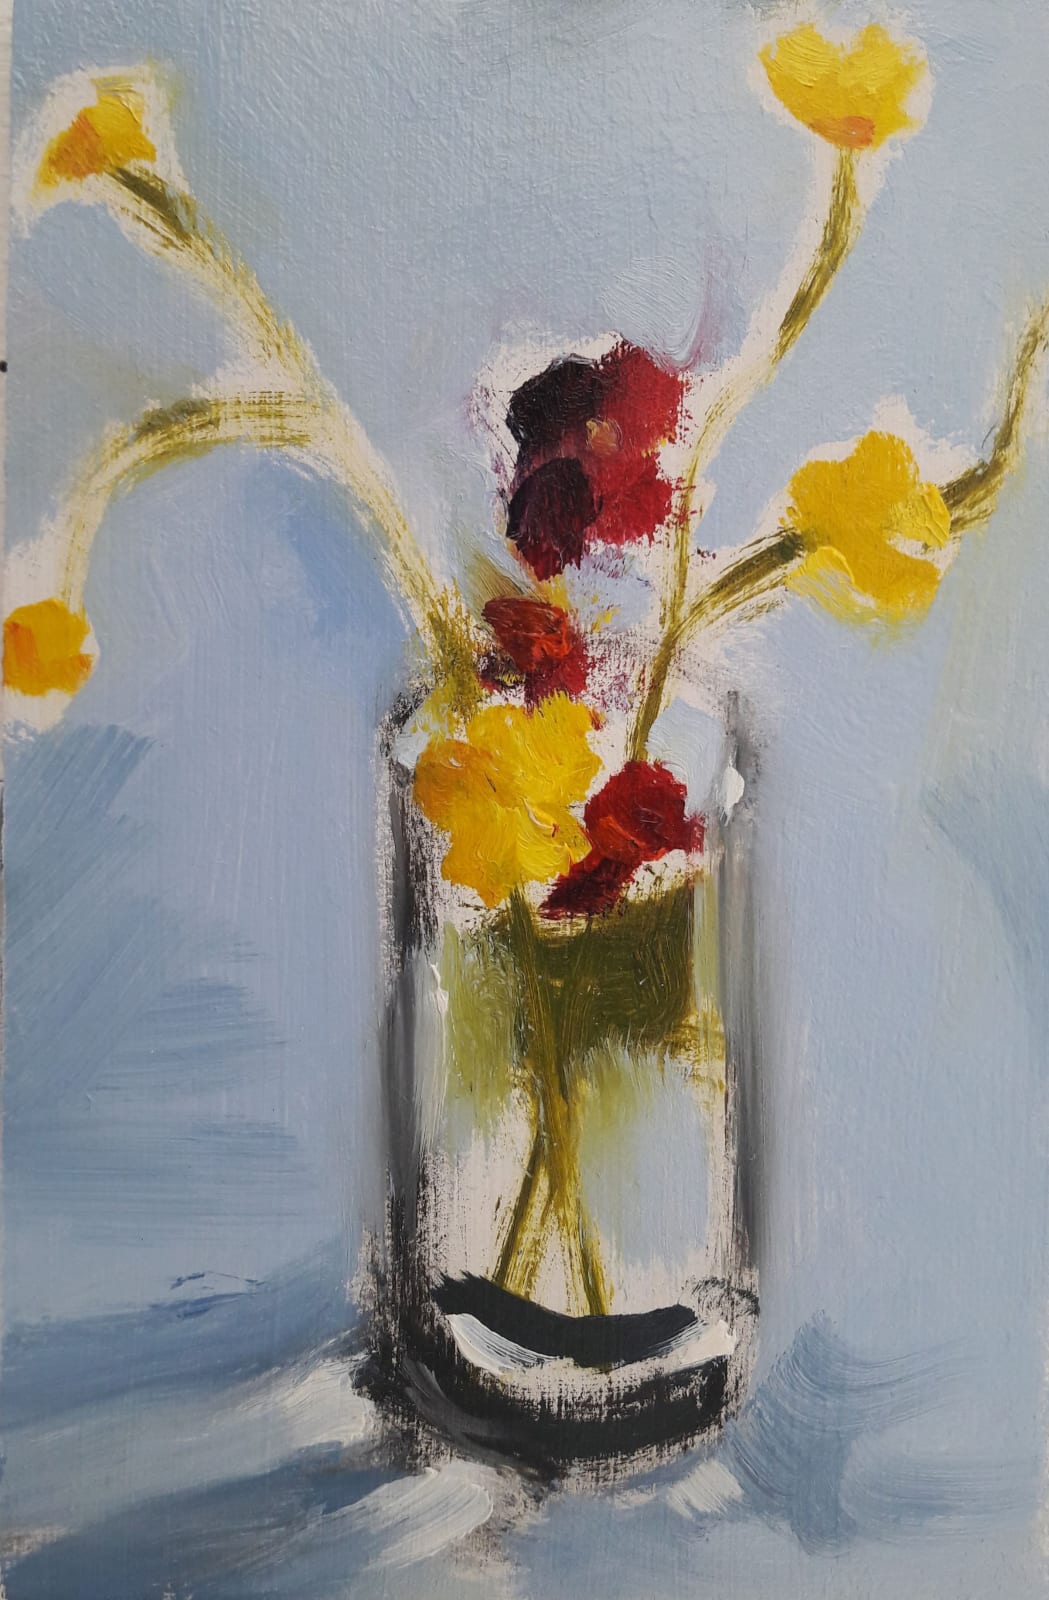 Liam Spencer, Wildflowers in a Jar, 2018